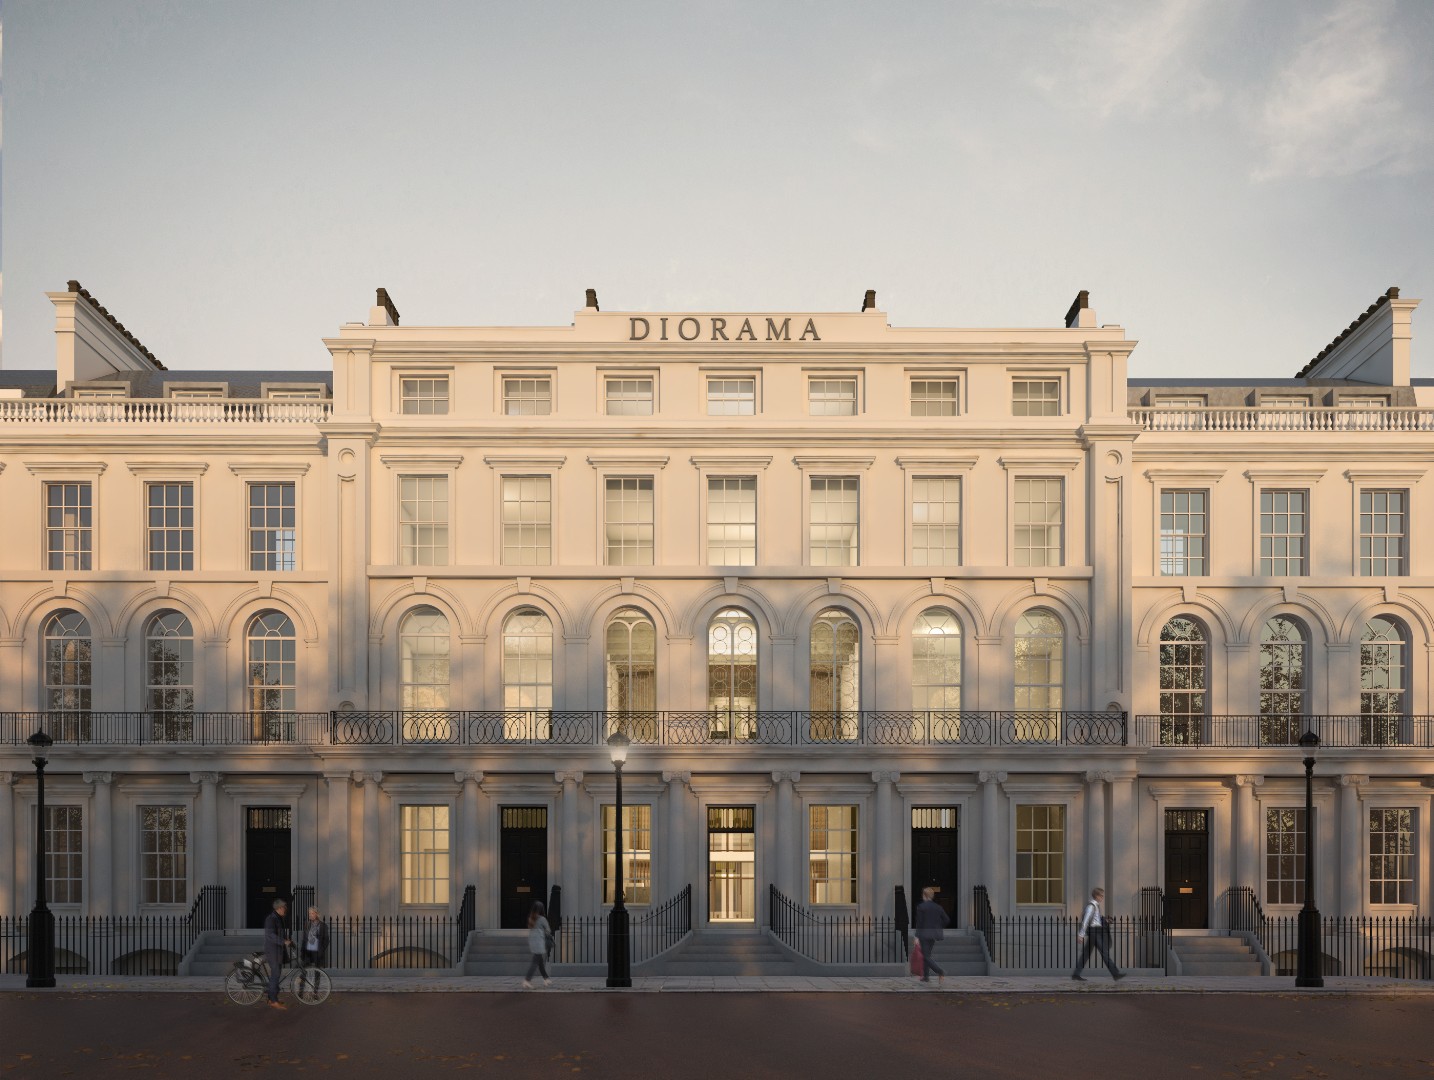 The regeneration of a Regency Diorama in the heart of John Nash’s London